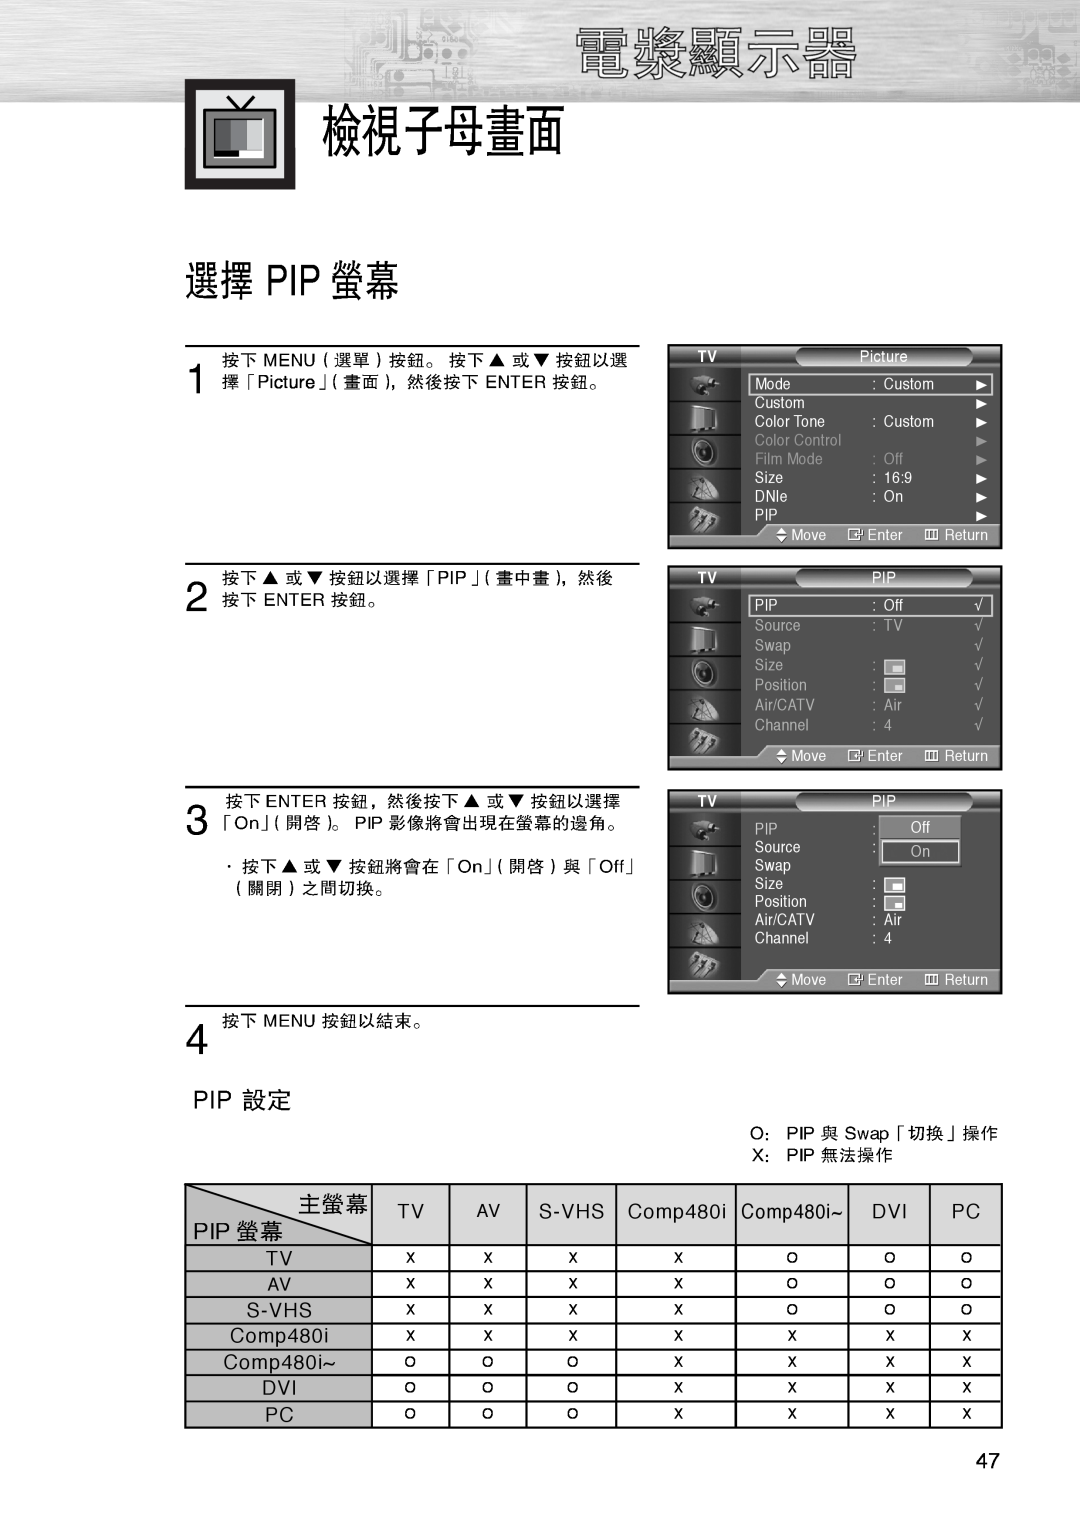 Samsung PL-42D4S manual Source, Swap, Size, Position, Air/CATV, Channel 